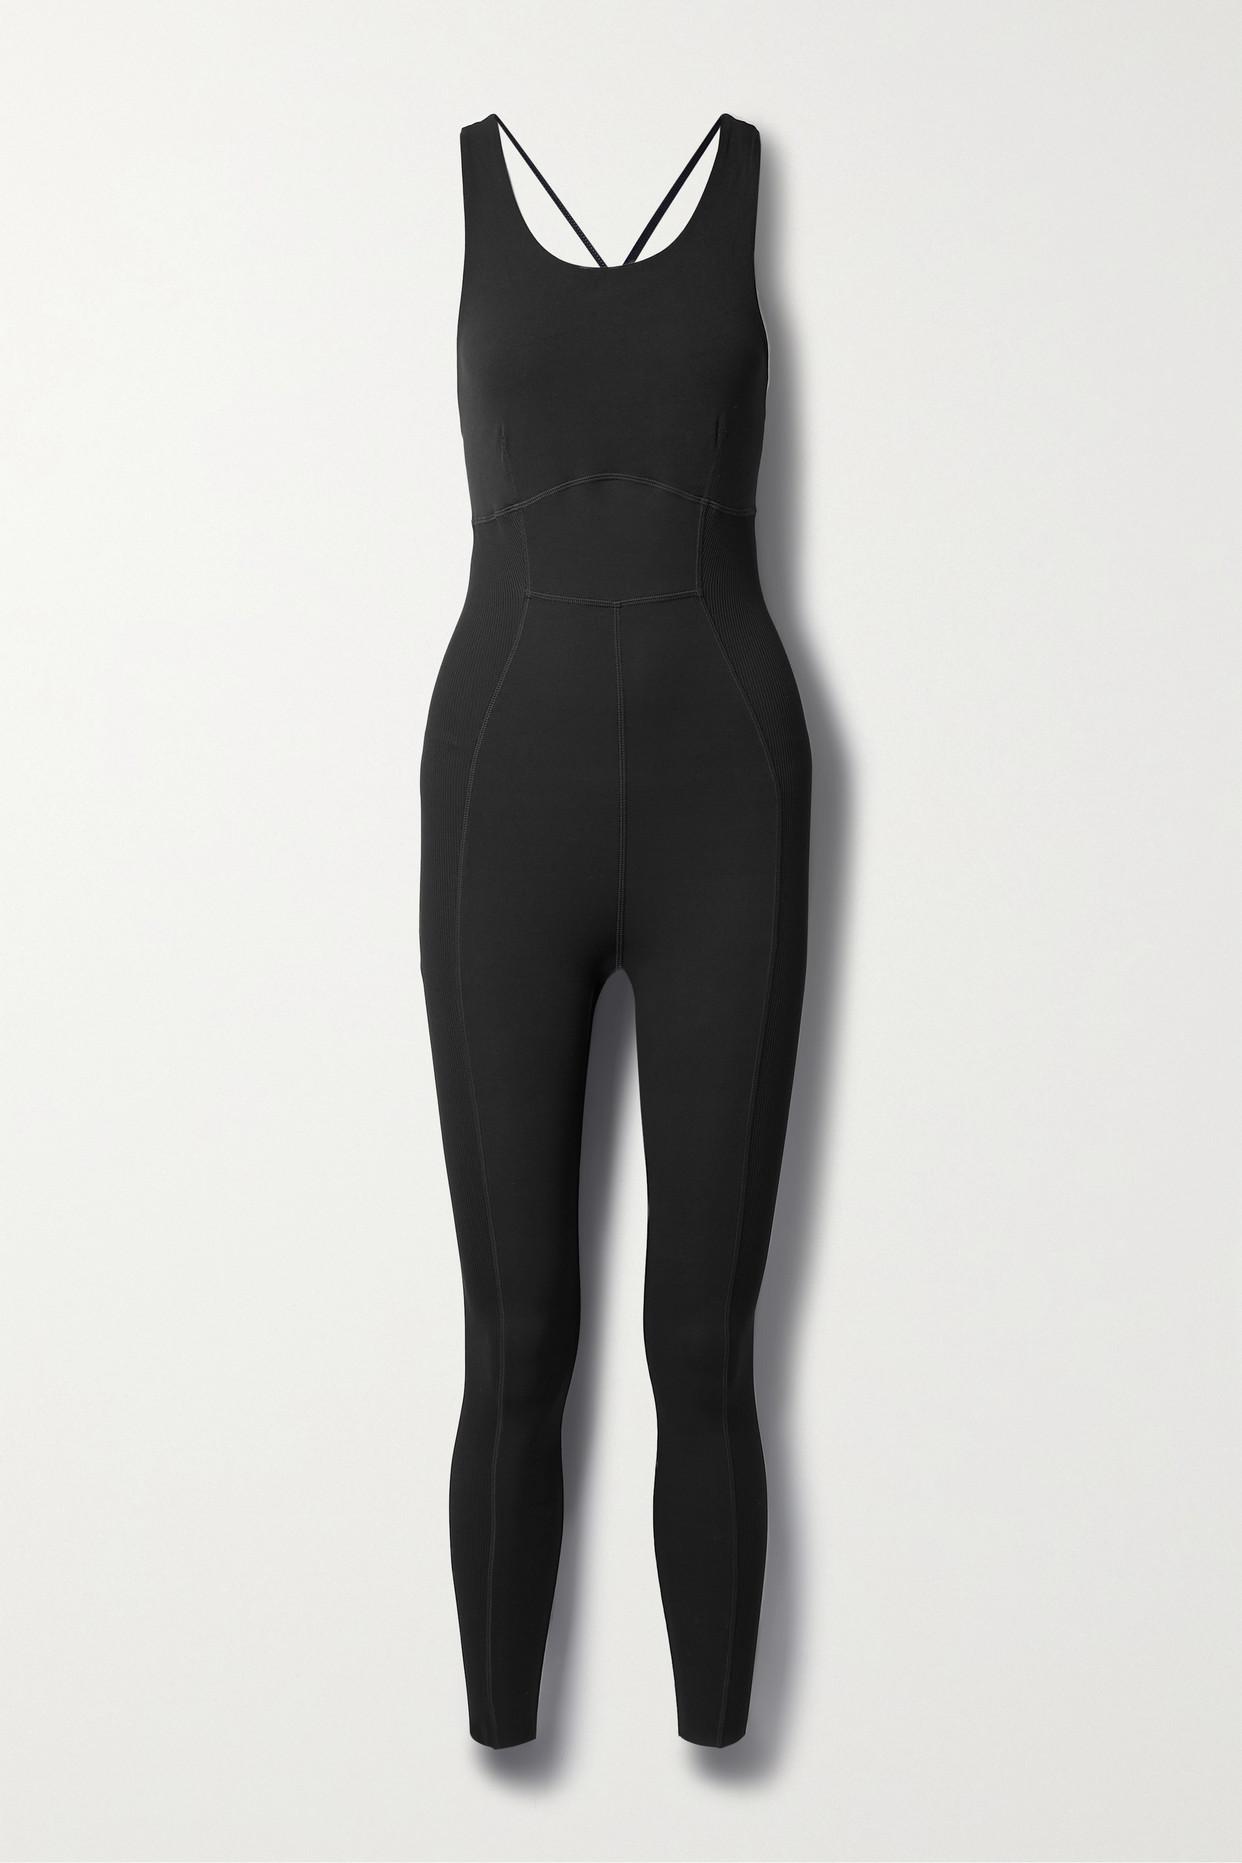 Nike Yoga Luxe Dri-fit Jumpsuit in Black